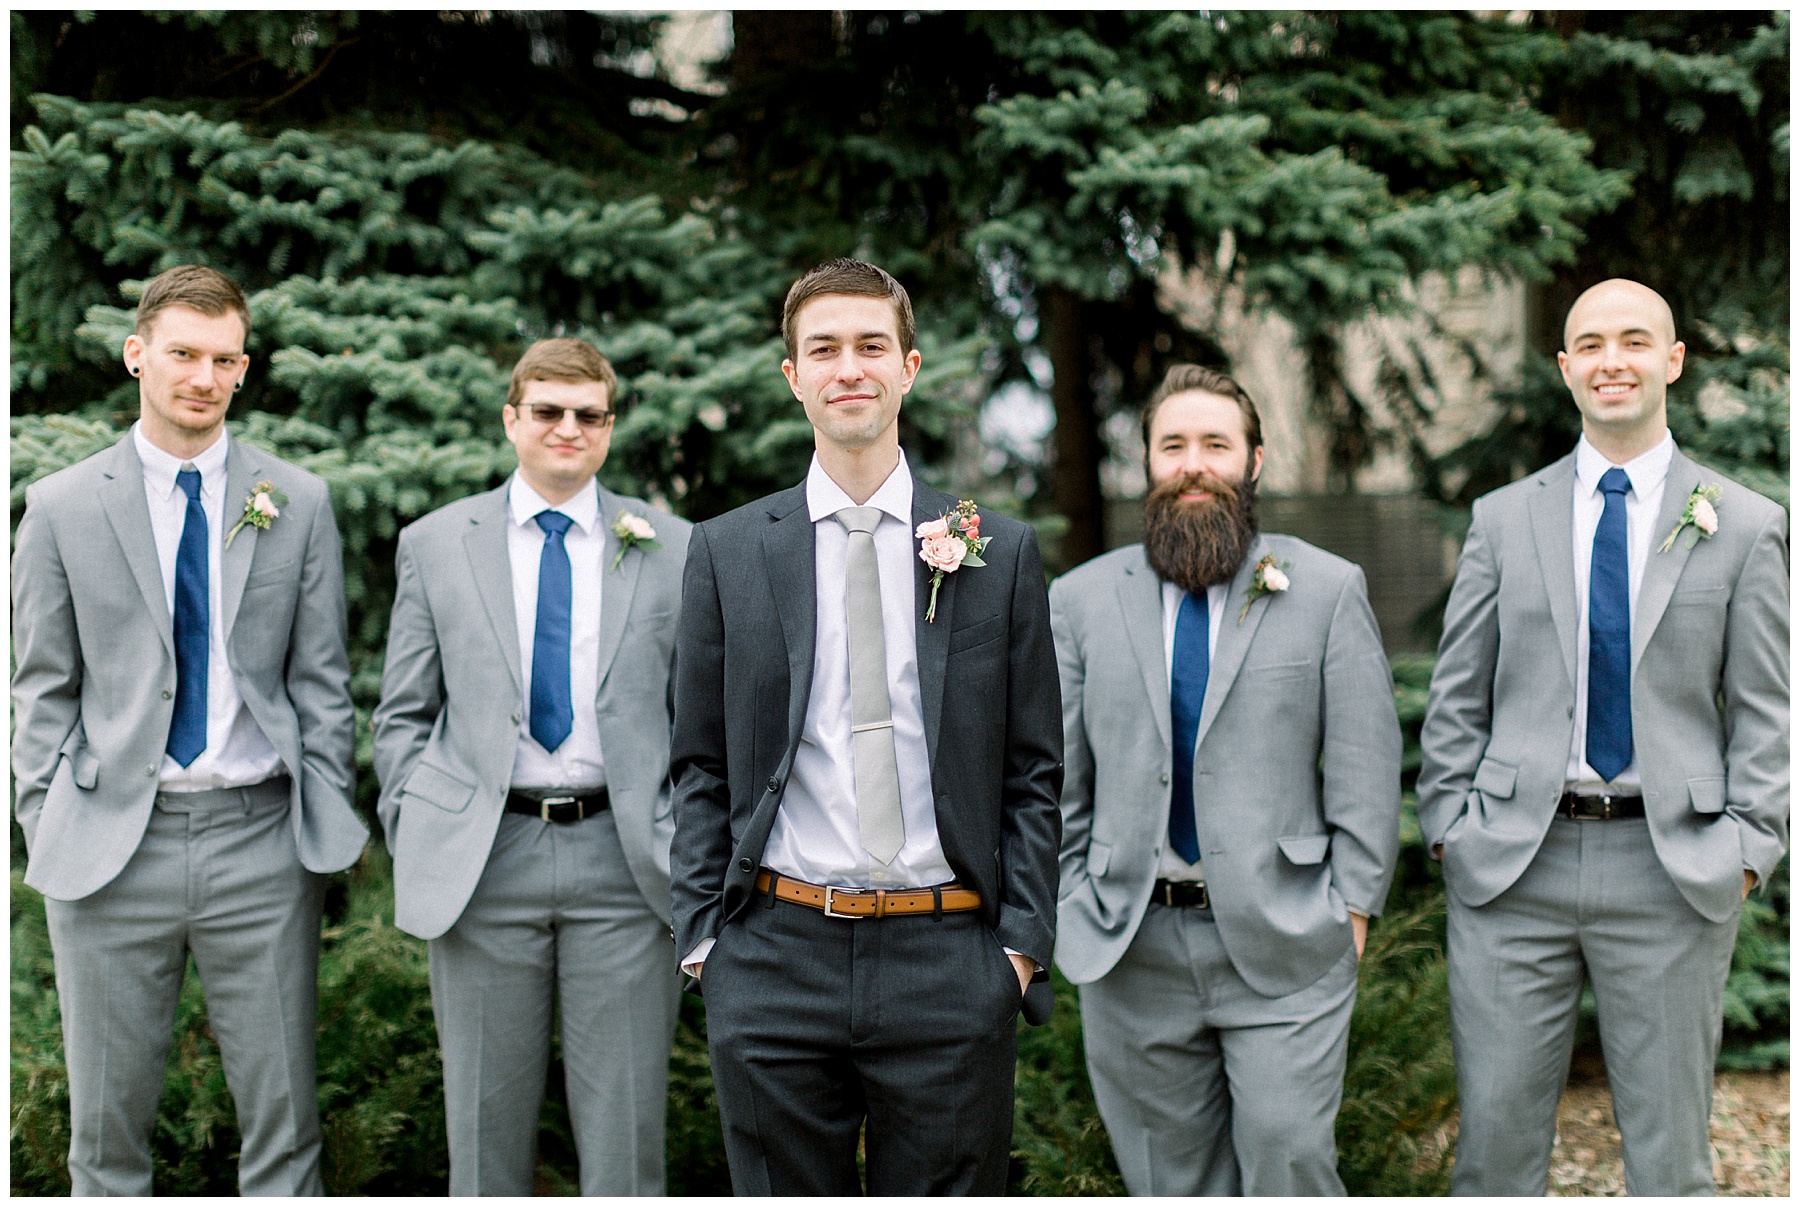 groom and groomsmen suit and tie